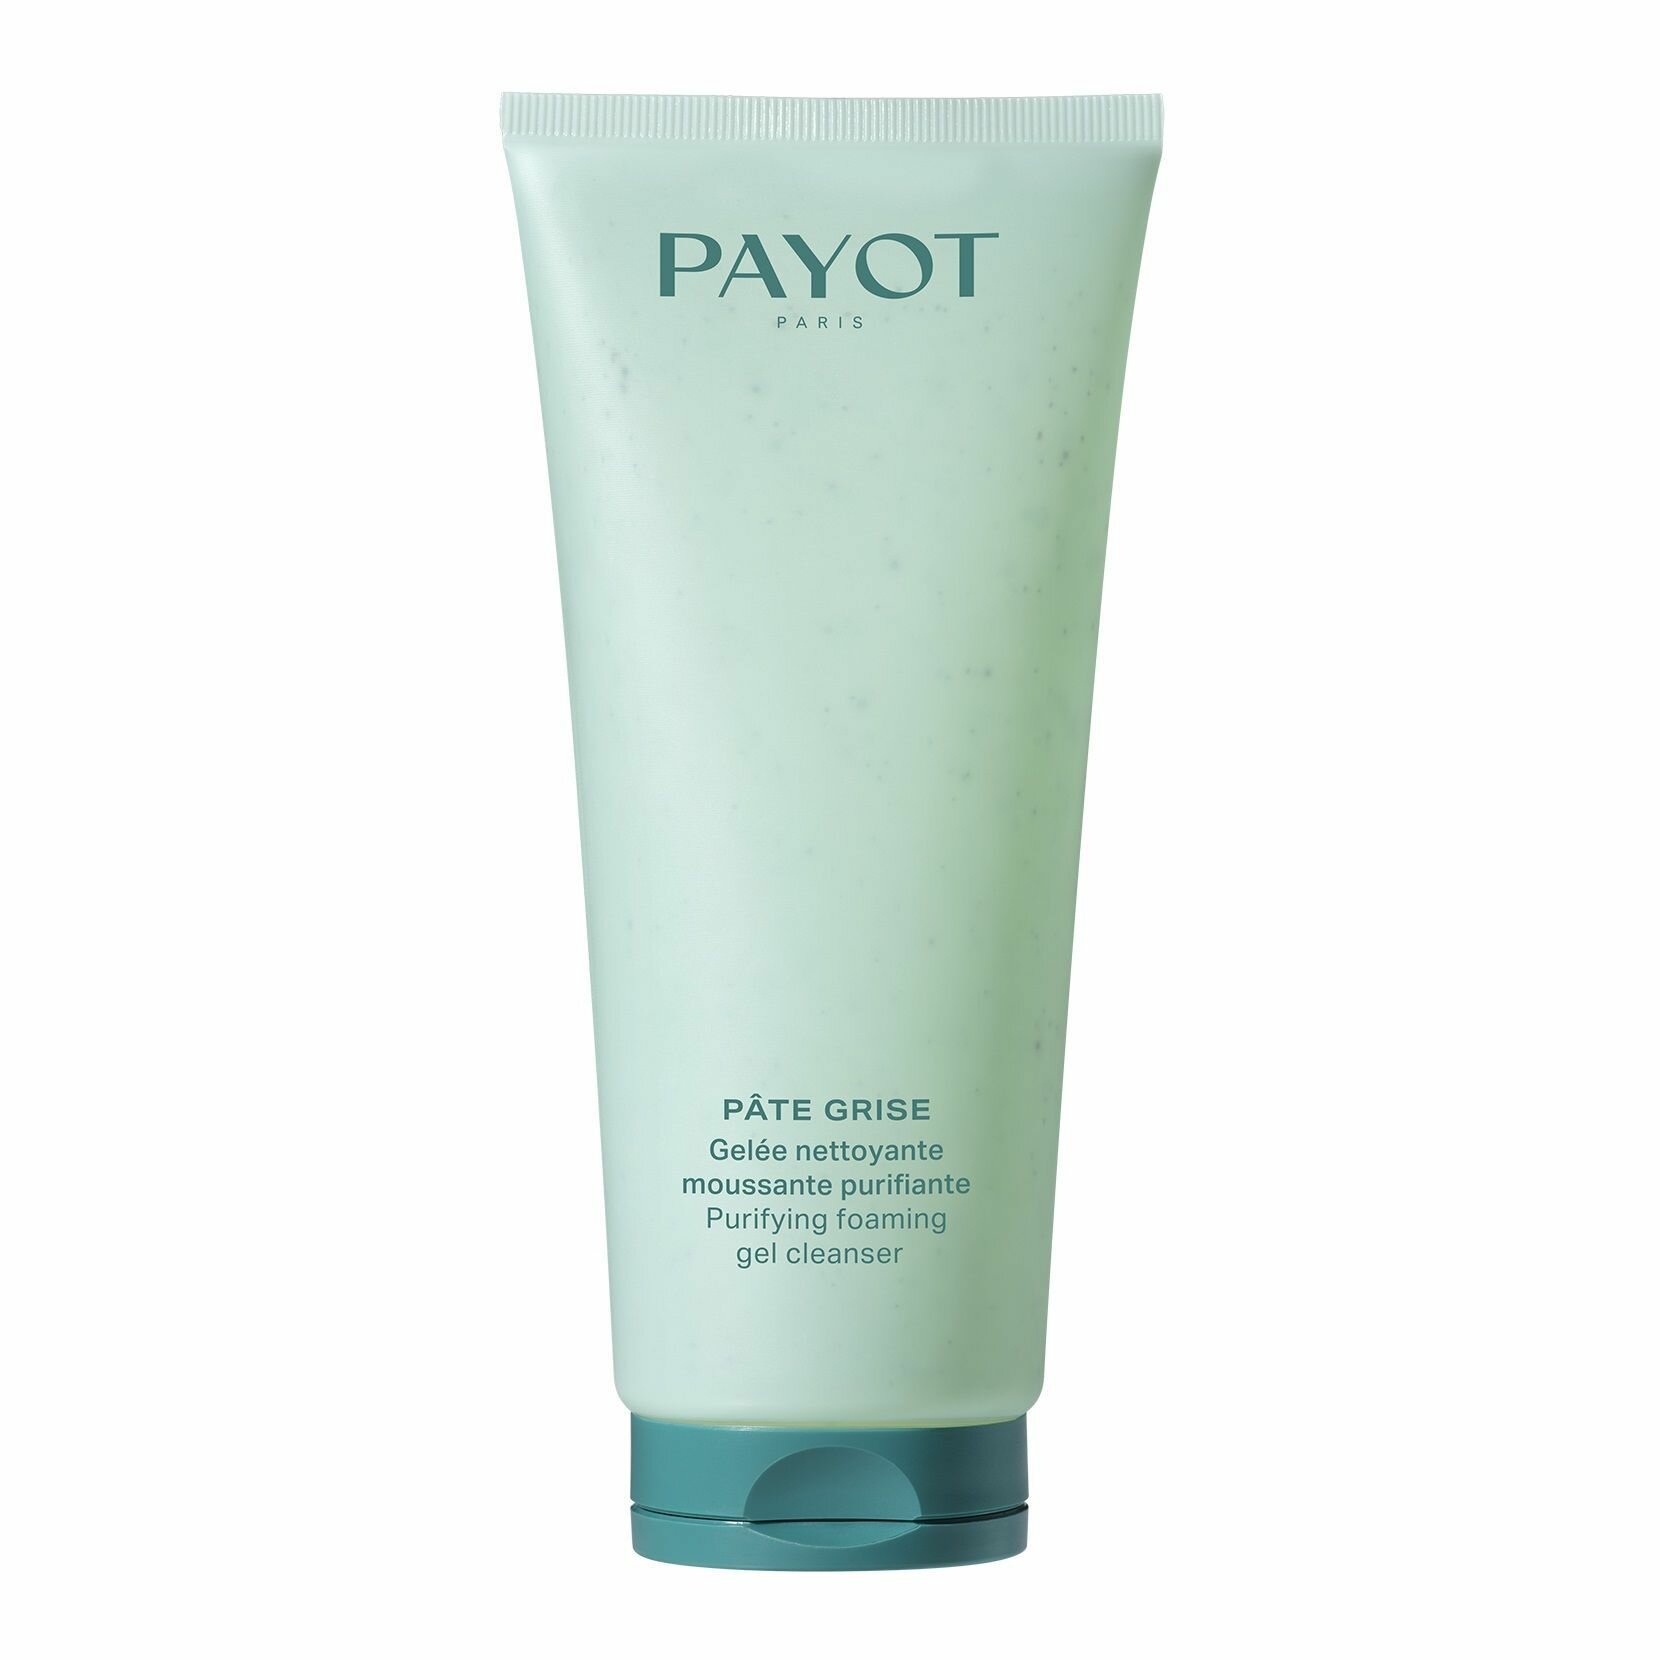 Payot Pate Grise Очищающий гель-пенка для кожи лица, 200 мл